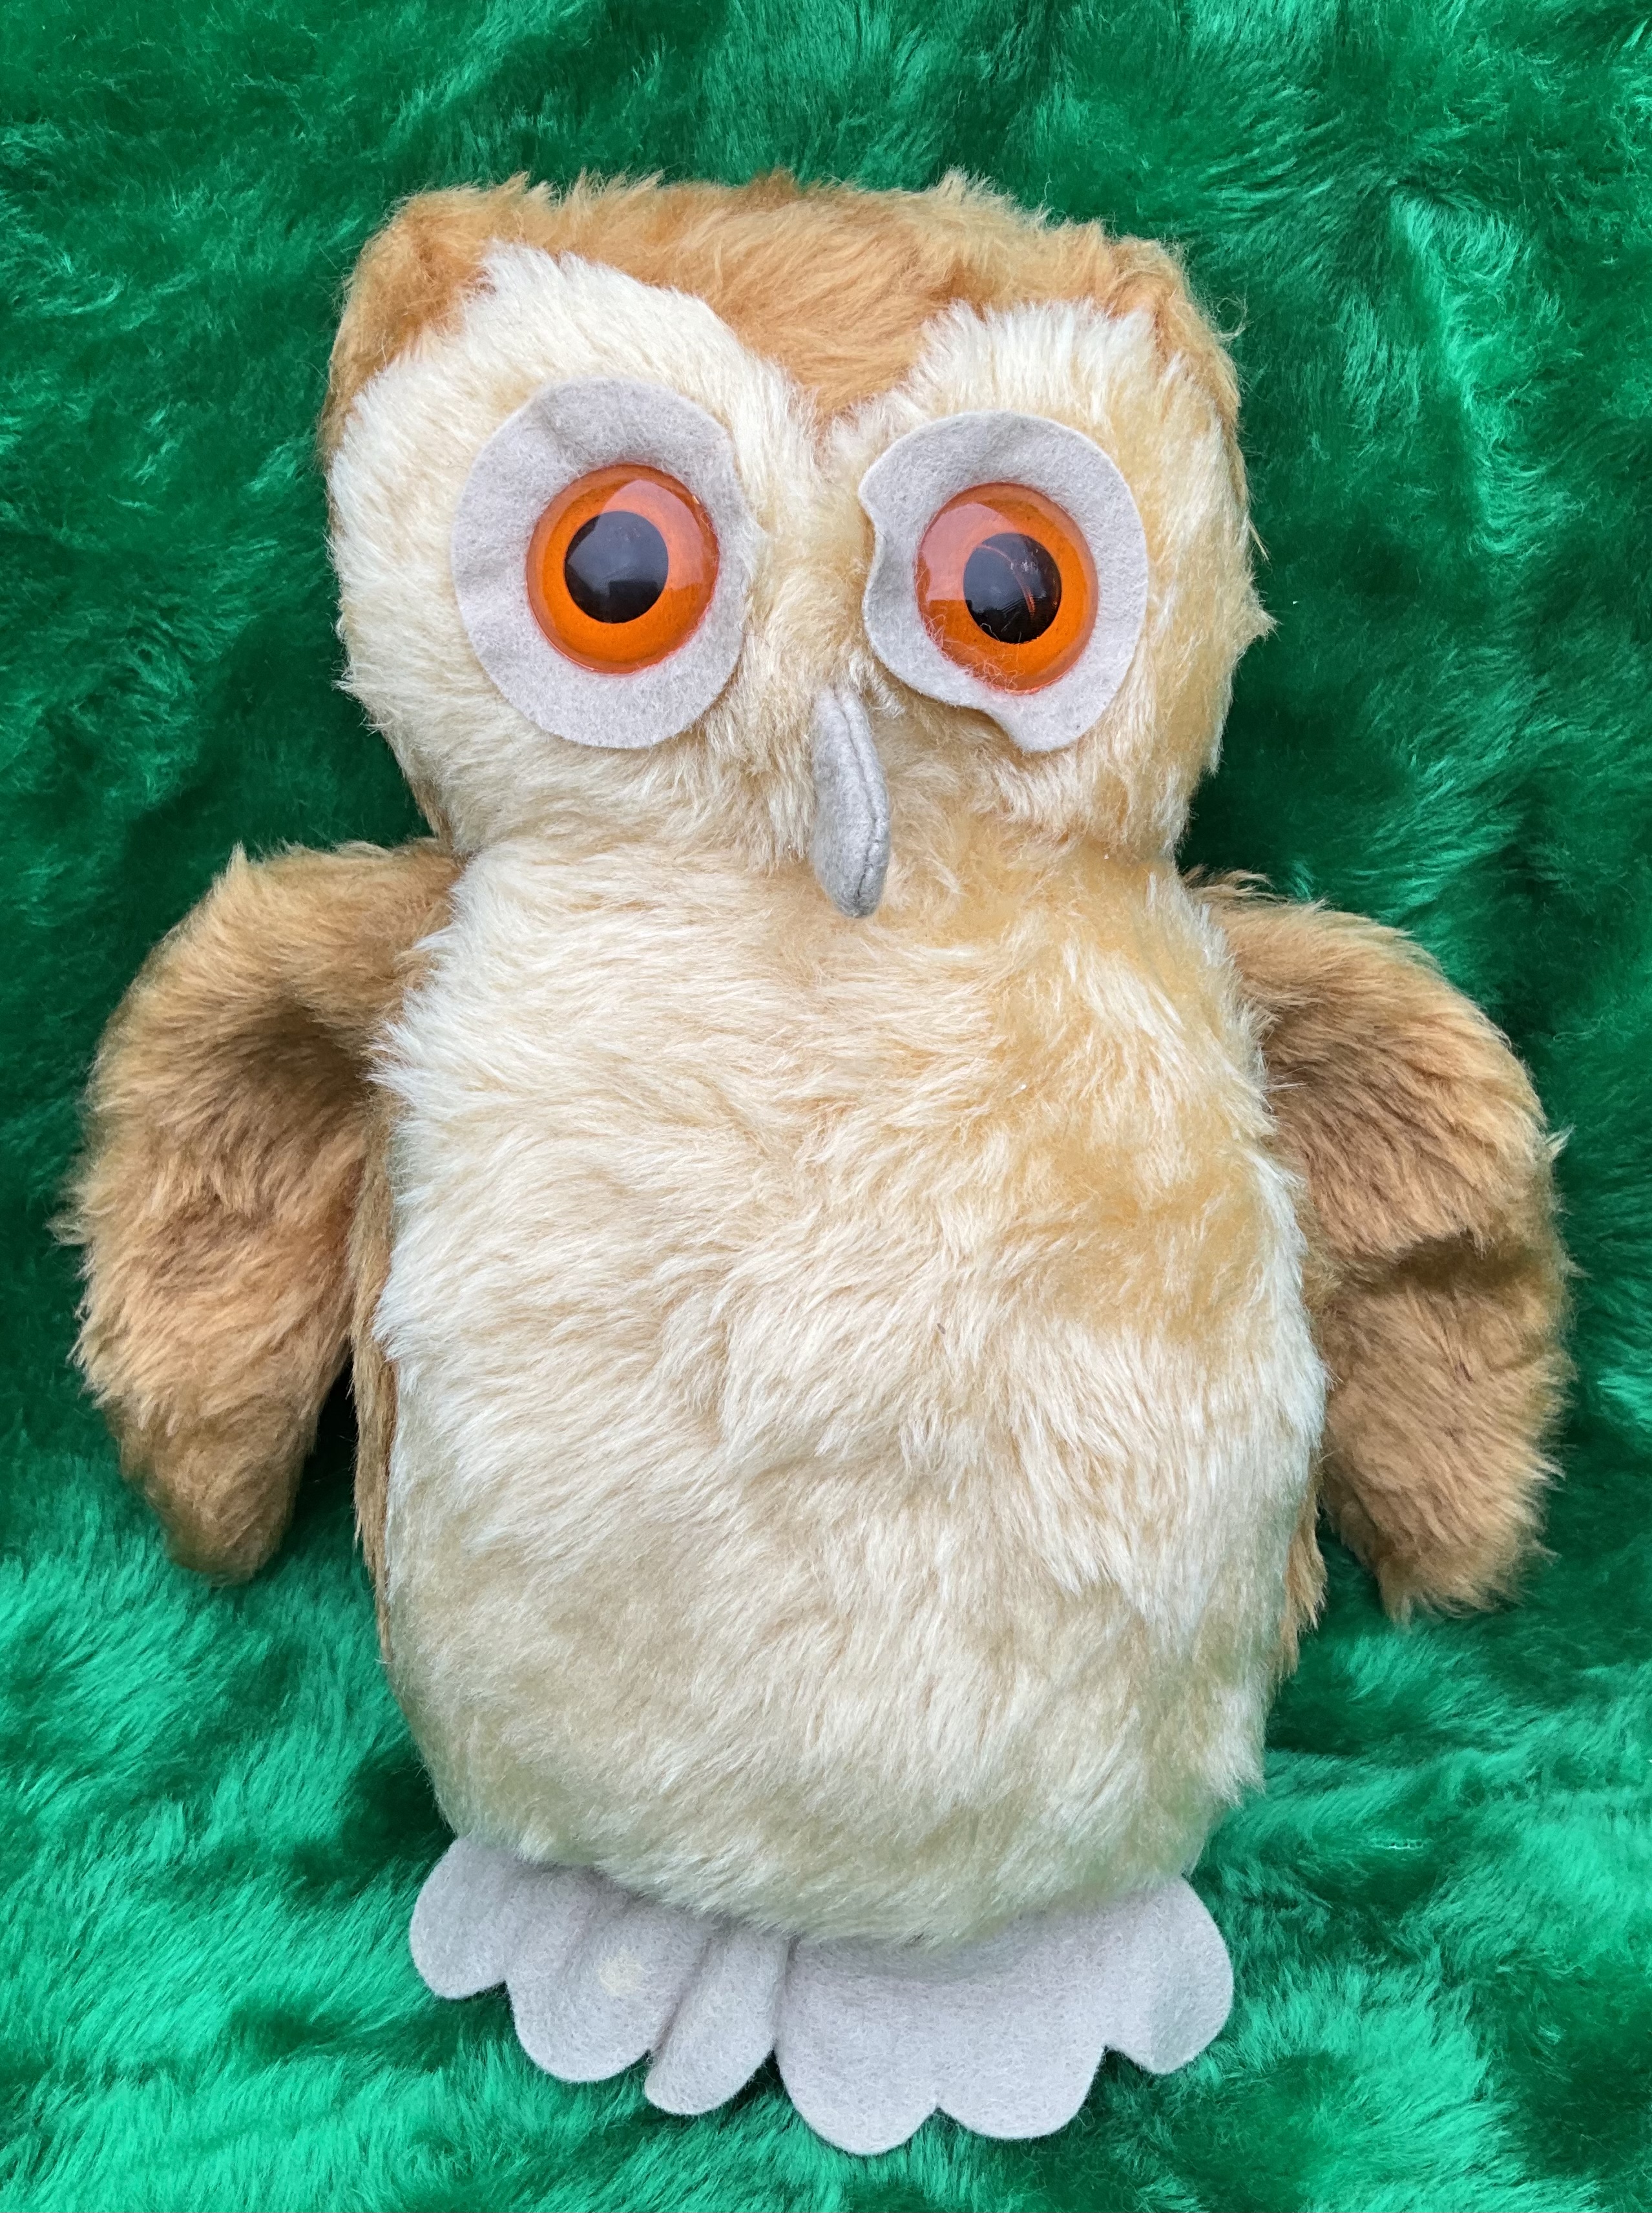 75 x 22cm plush soft toy owls